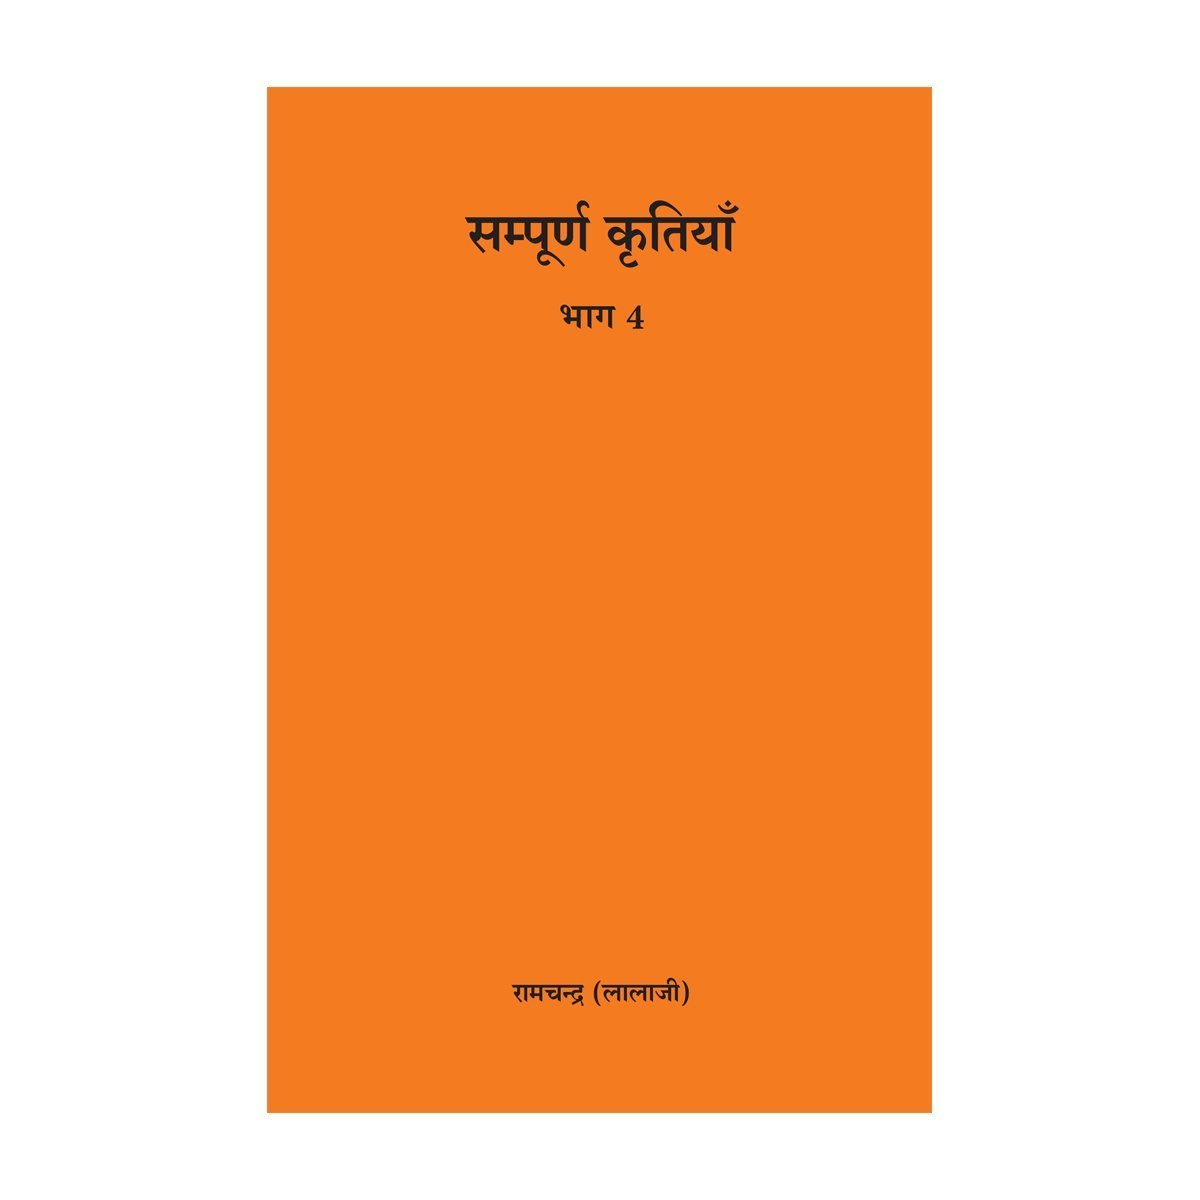 Complete Works of Ram Chandra (Lalaji) - Volume 4 - hfnl!fe